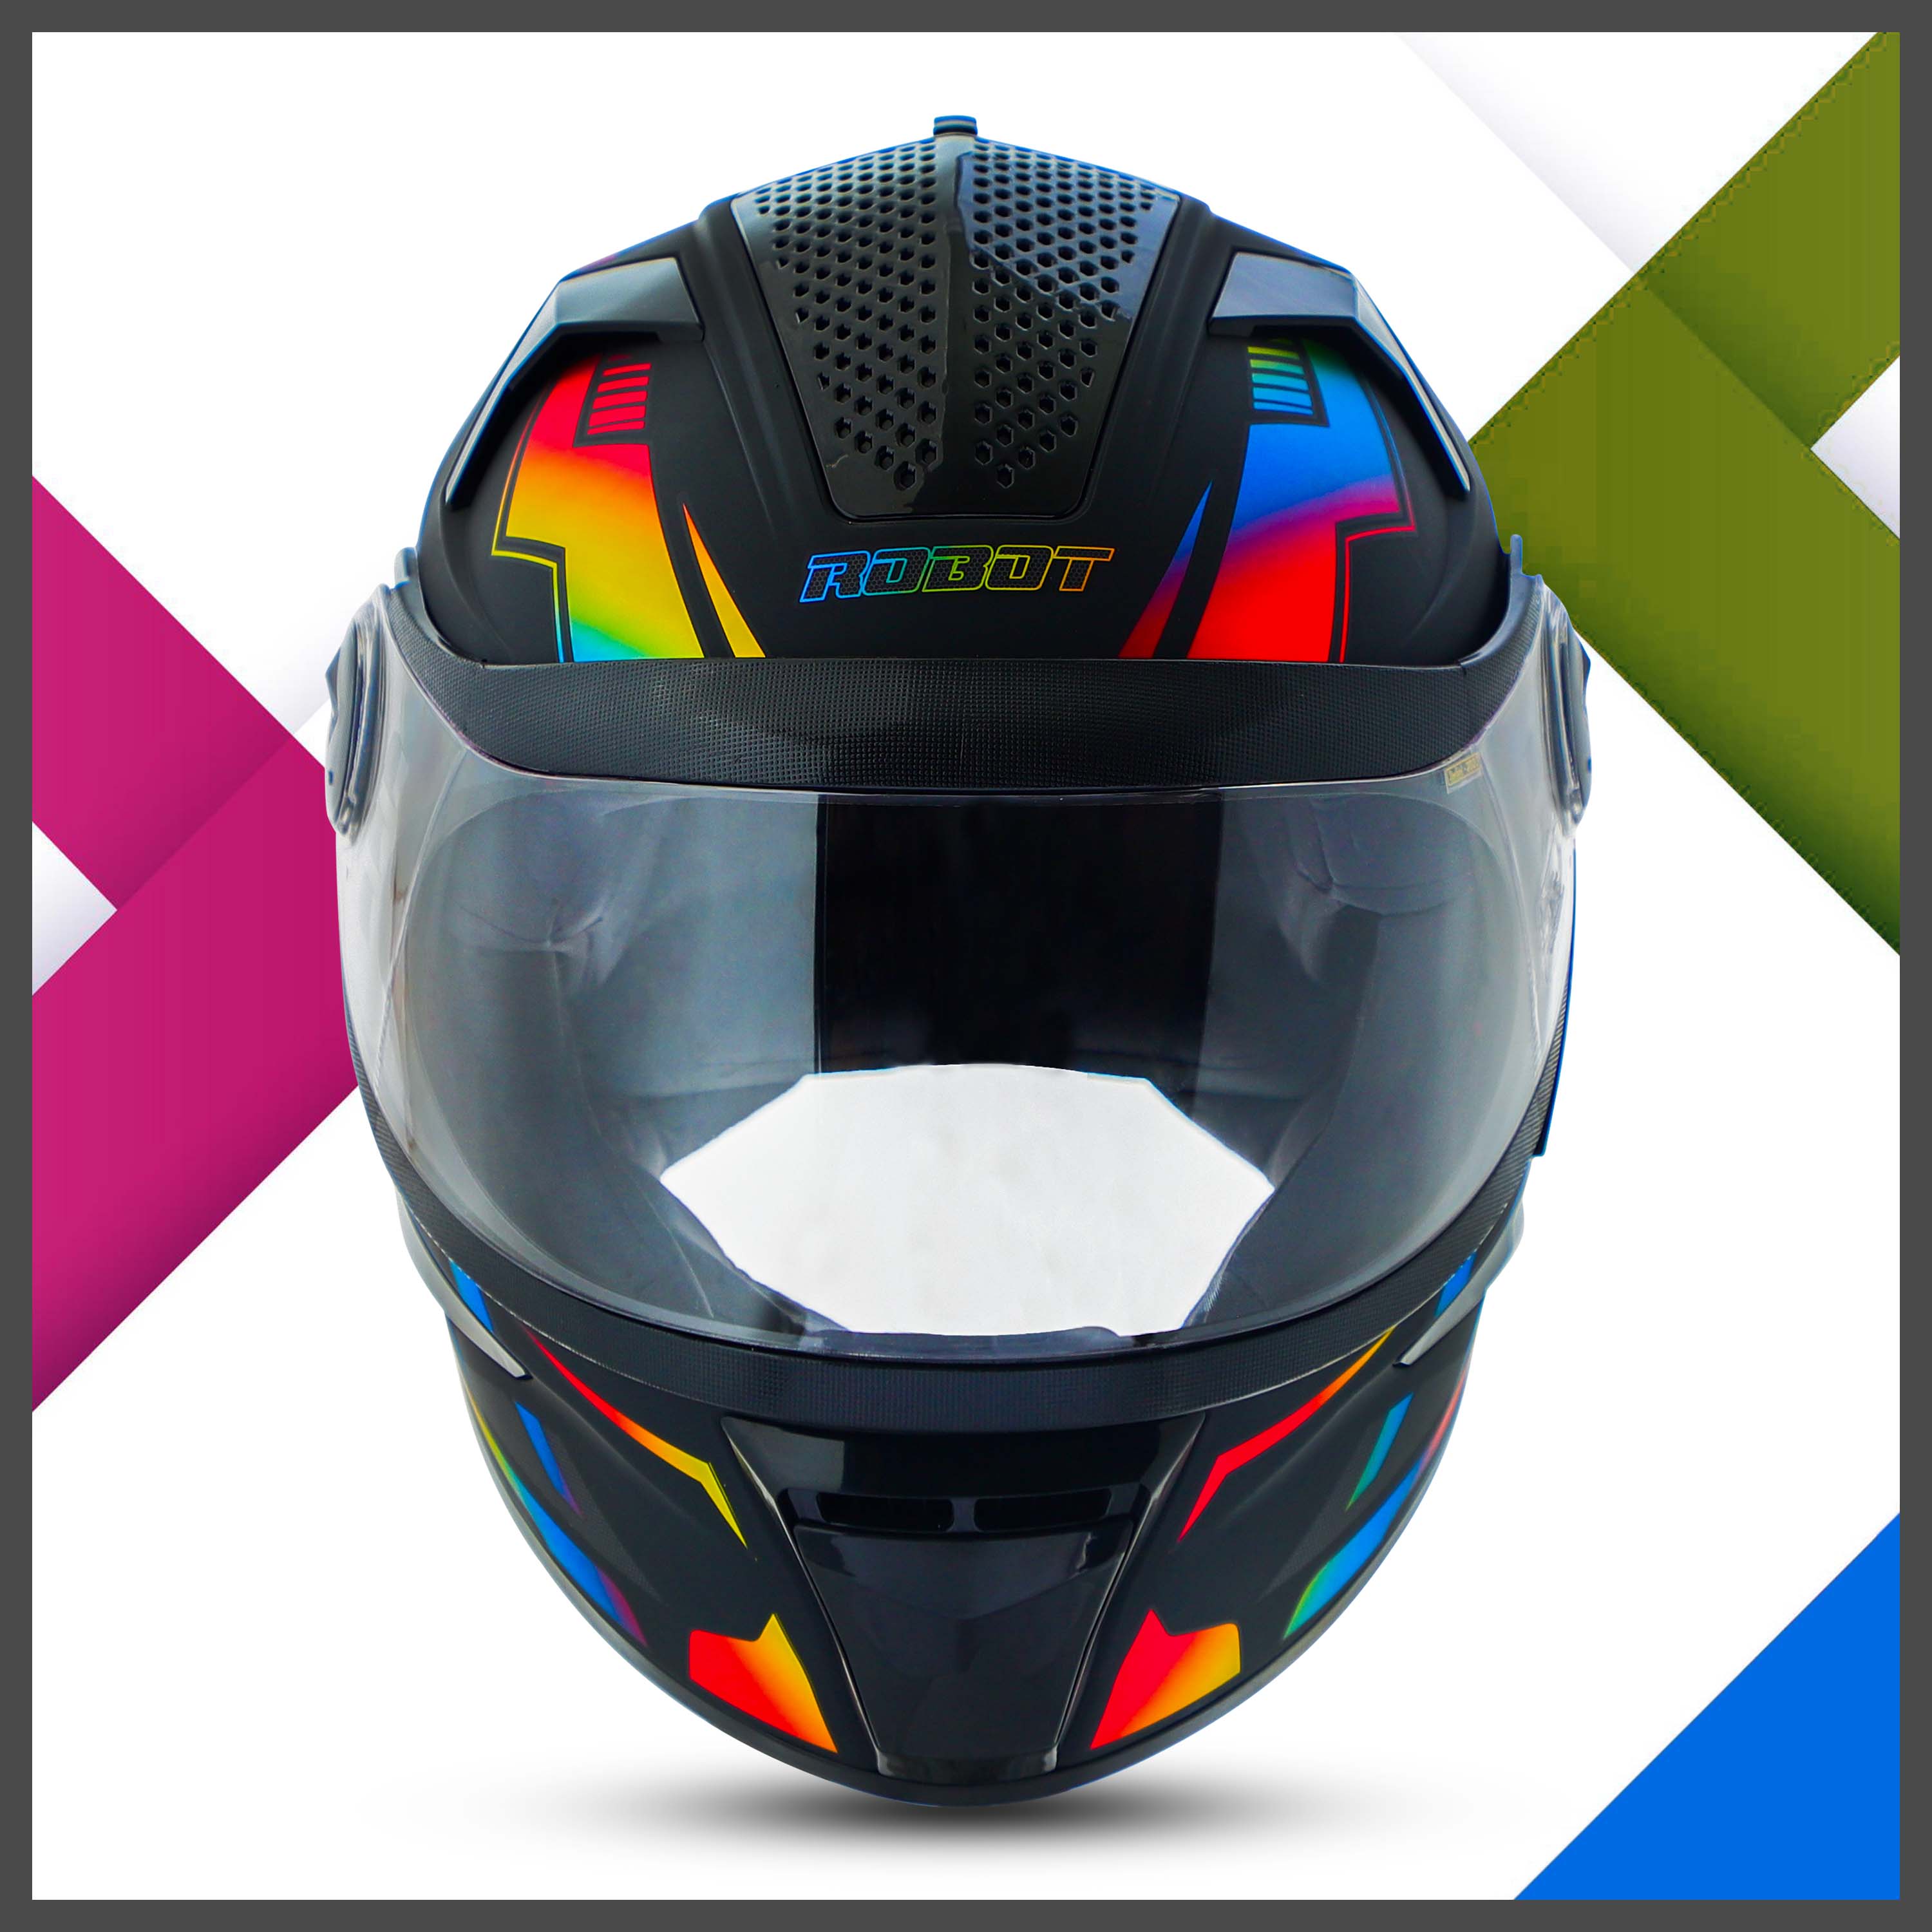 Steelbird SBH-17 Robot Terminator ISI Certified Full Face Chrome Graphic Helmet For Men And Women (Glossy Black Rainbow With Smoke Visor)